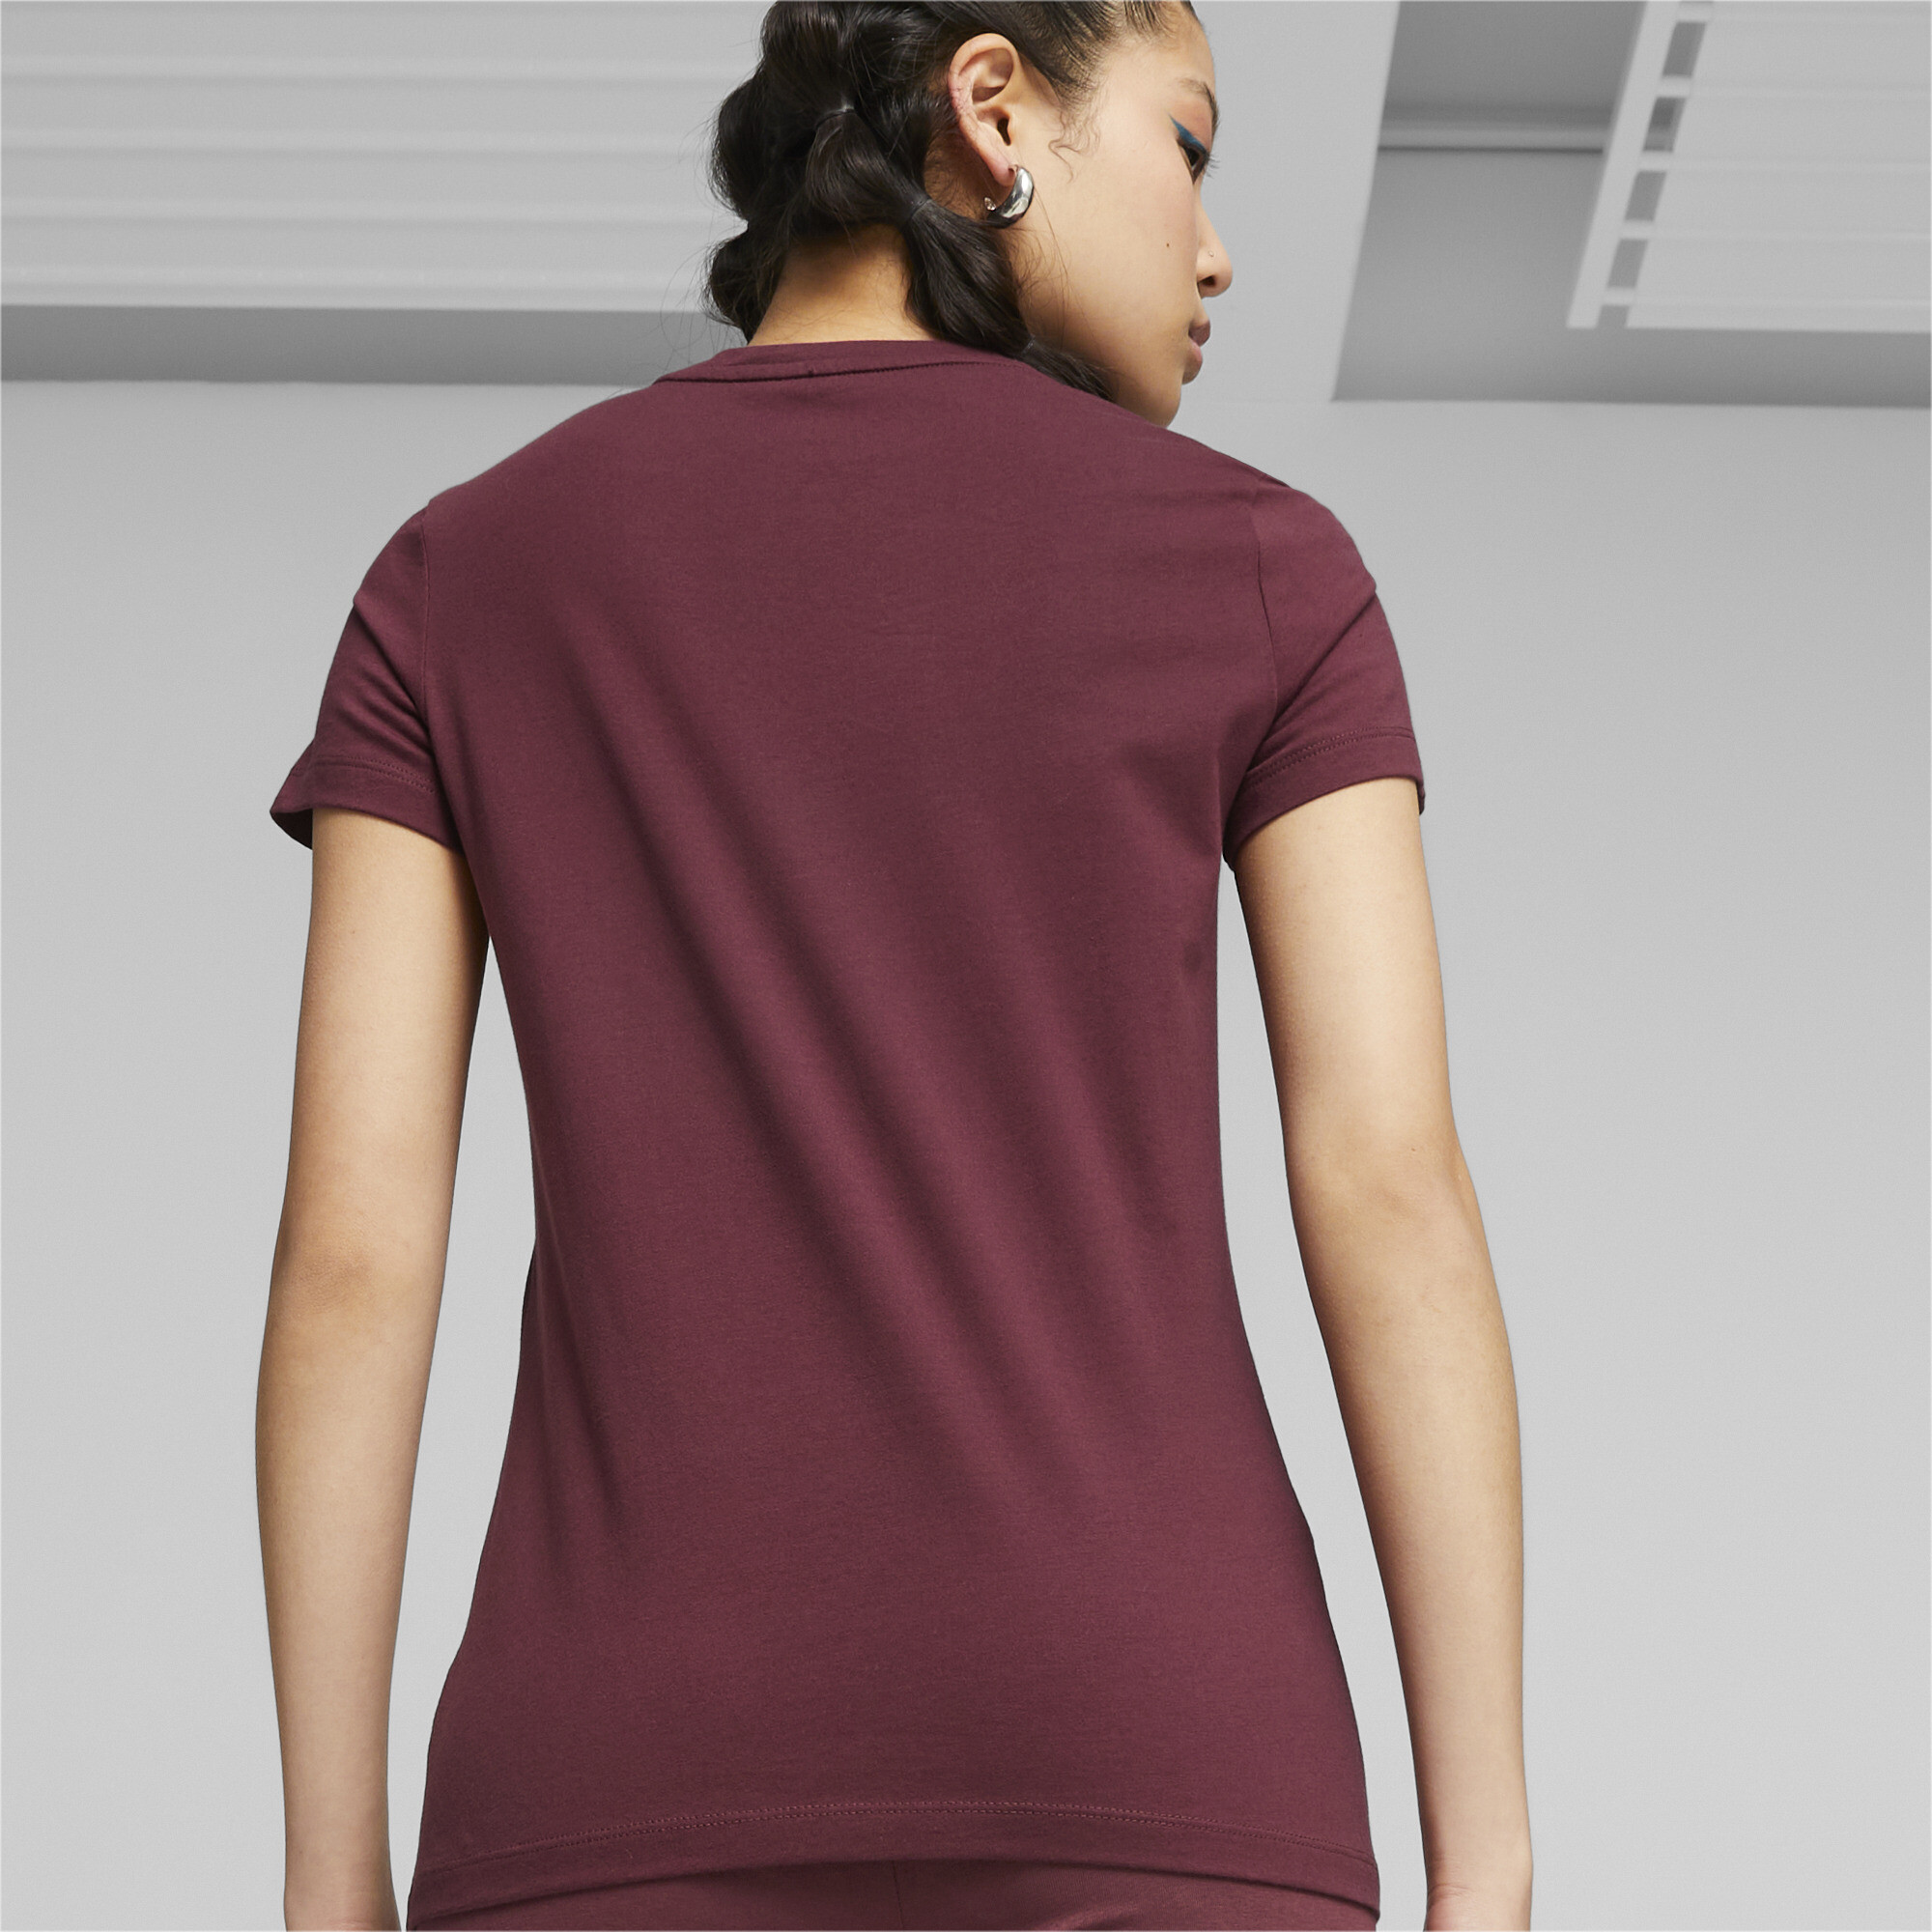 Women's Puma Essentials Logo's T-Shirt, Red, Size 3XL, Clothing